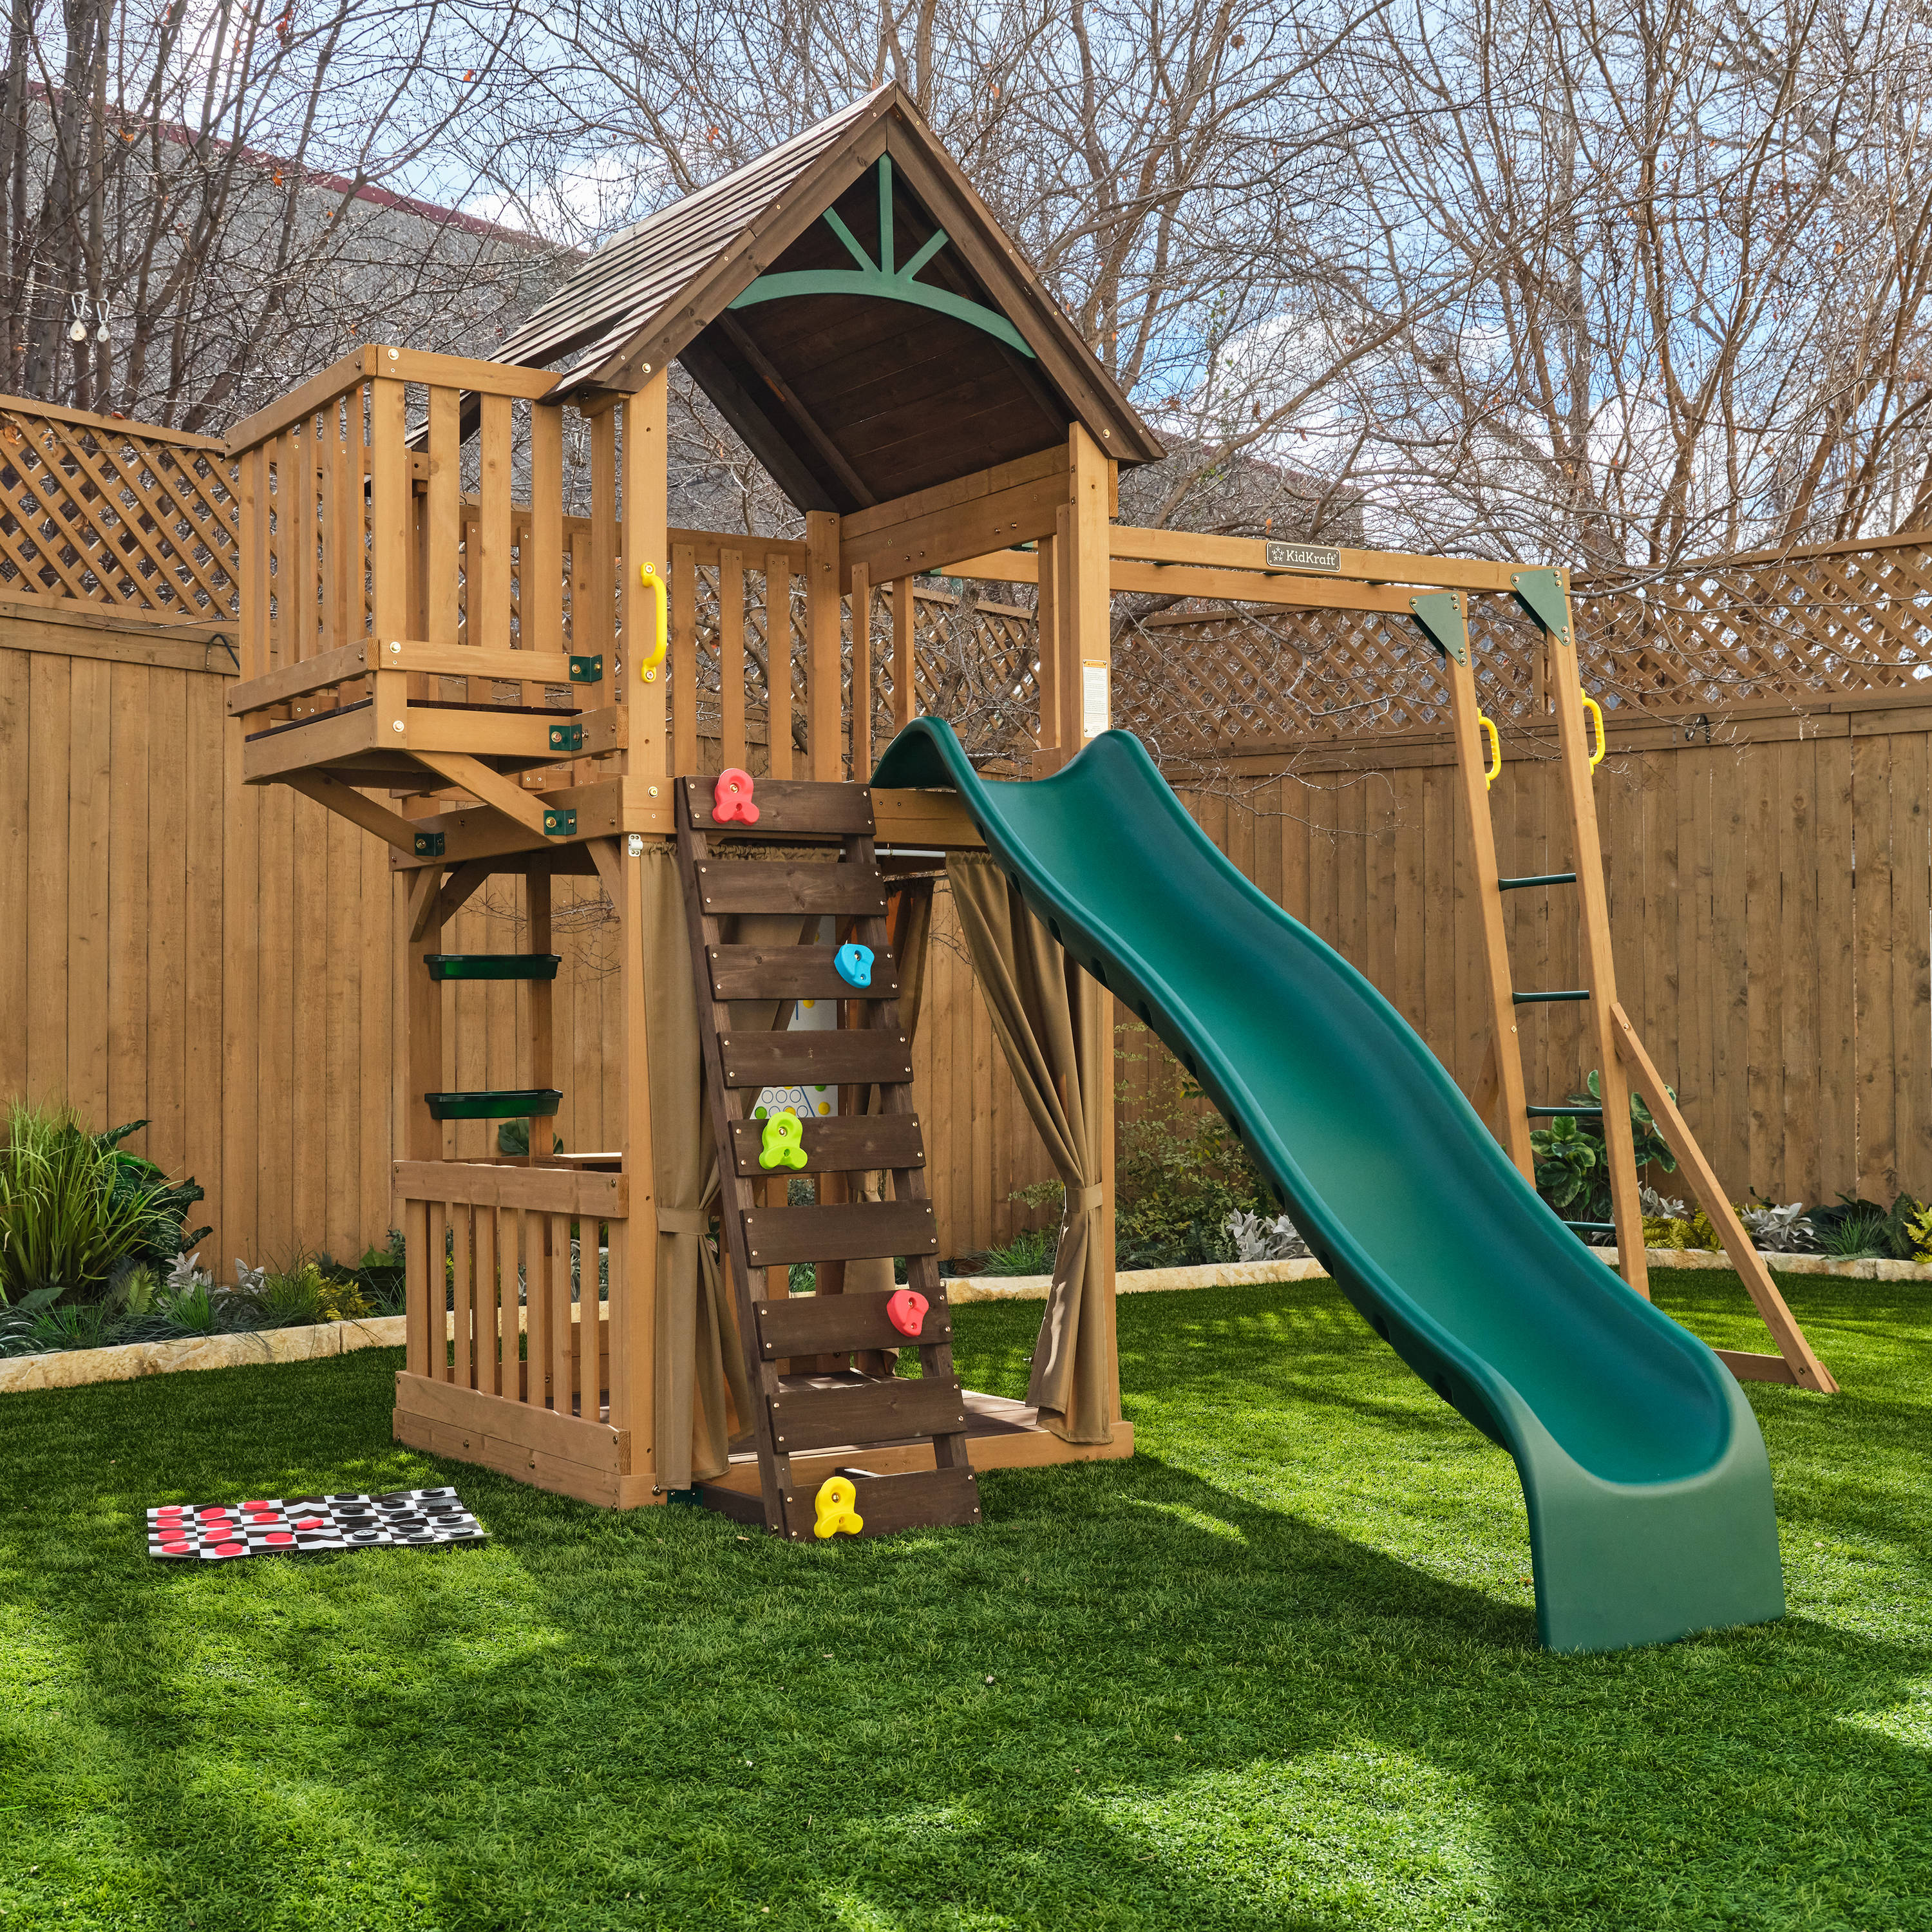 Kids Garden Plastic Wavy Slide Playgrounds Climbing Frame Playhouse Outdoor Toy 